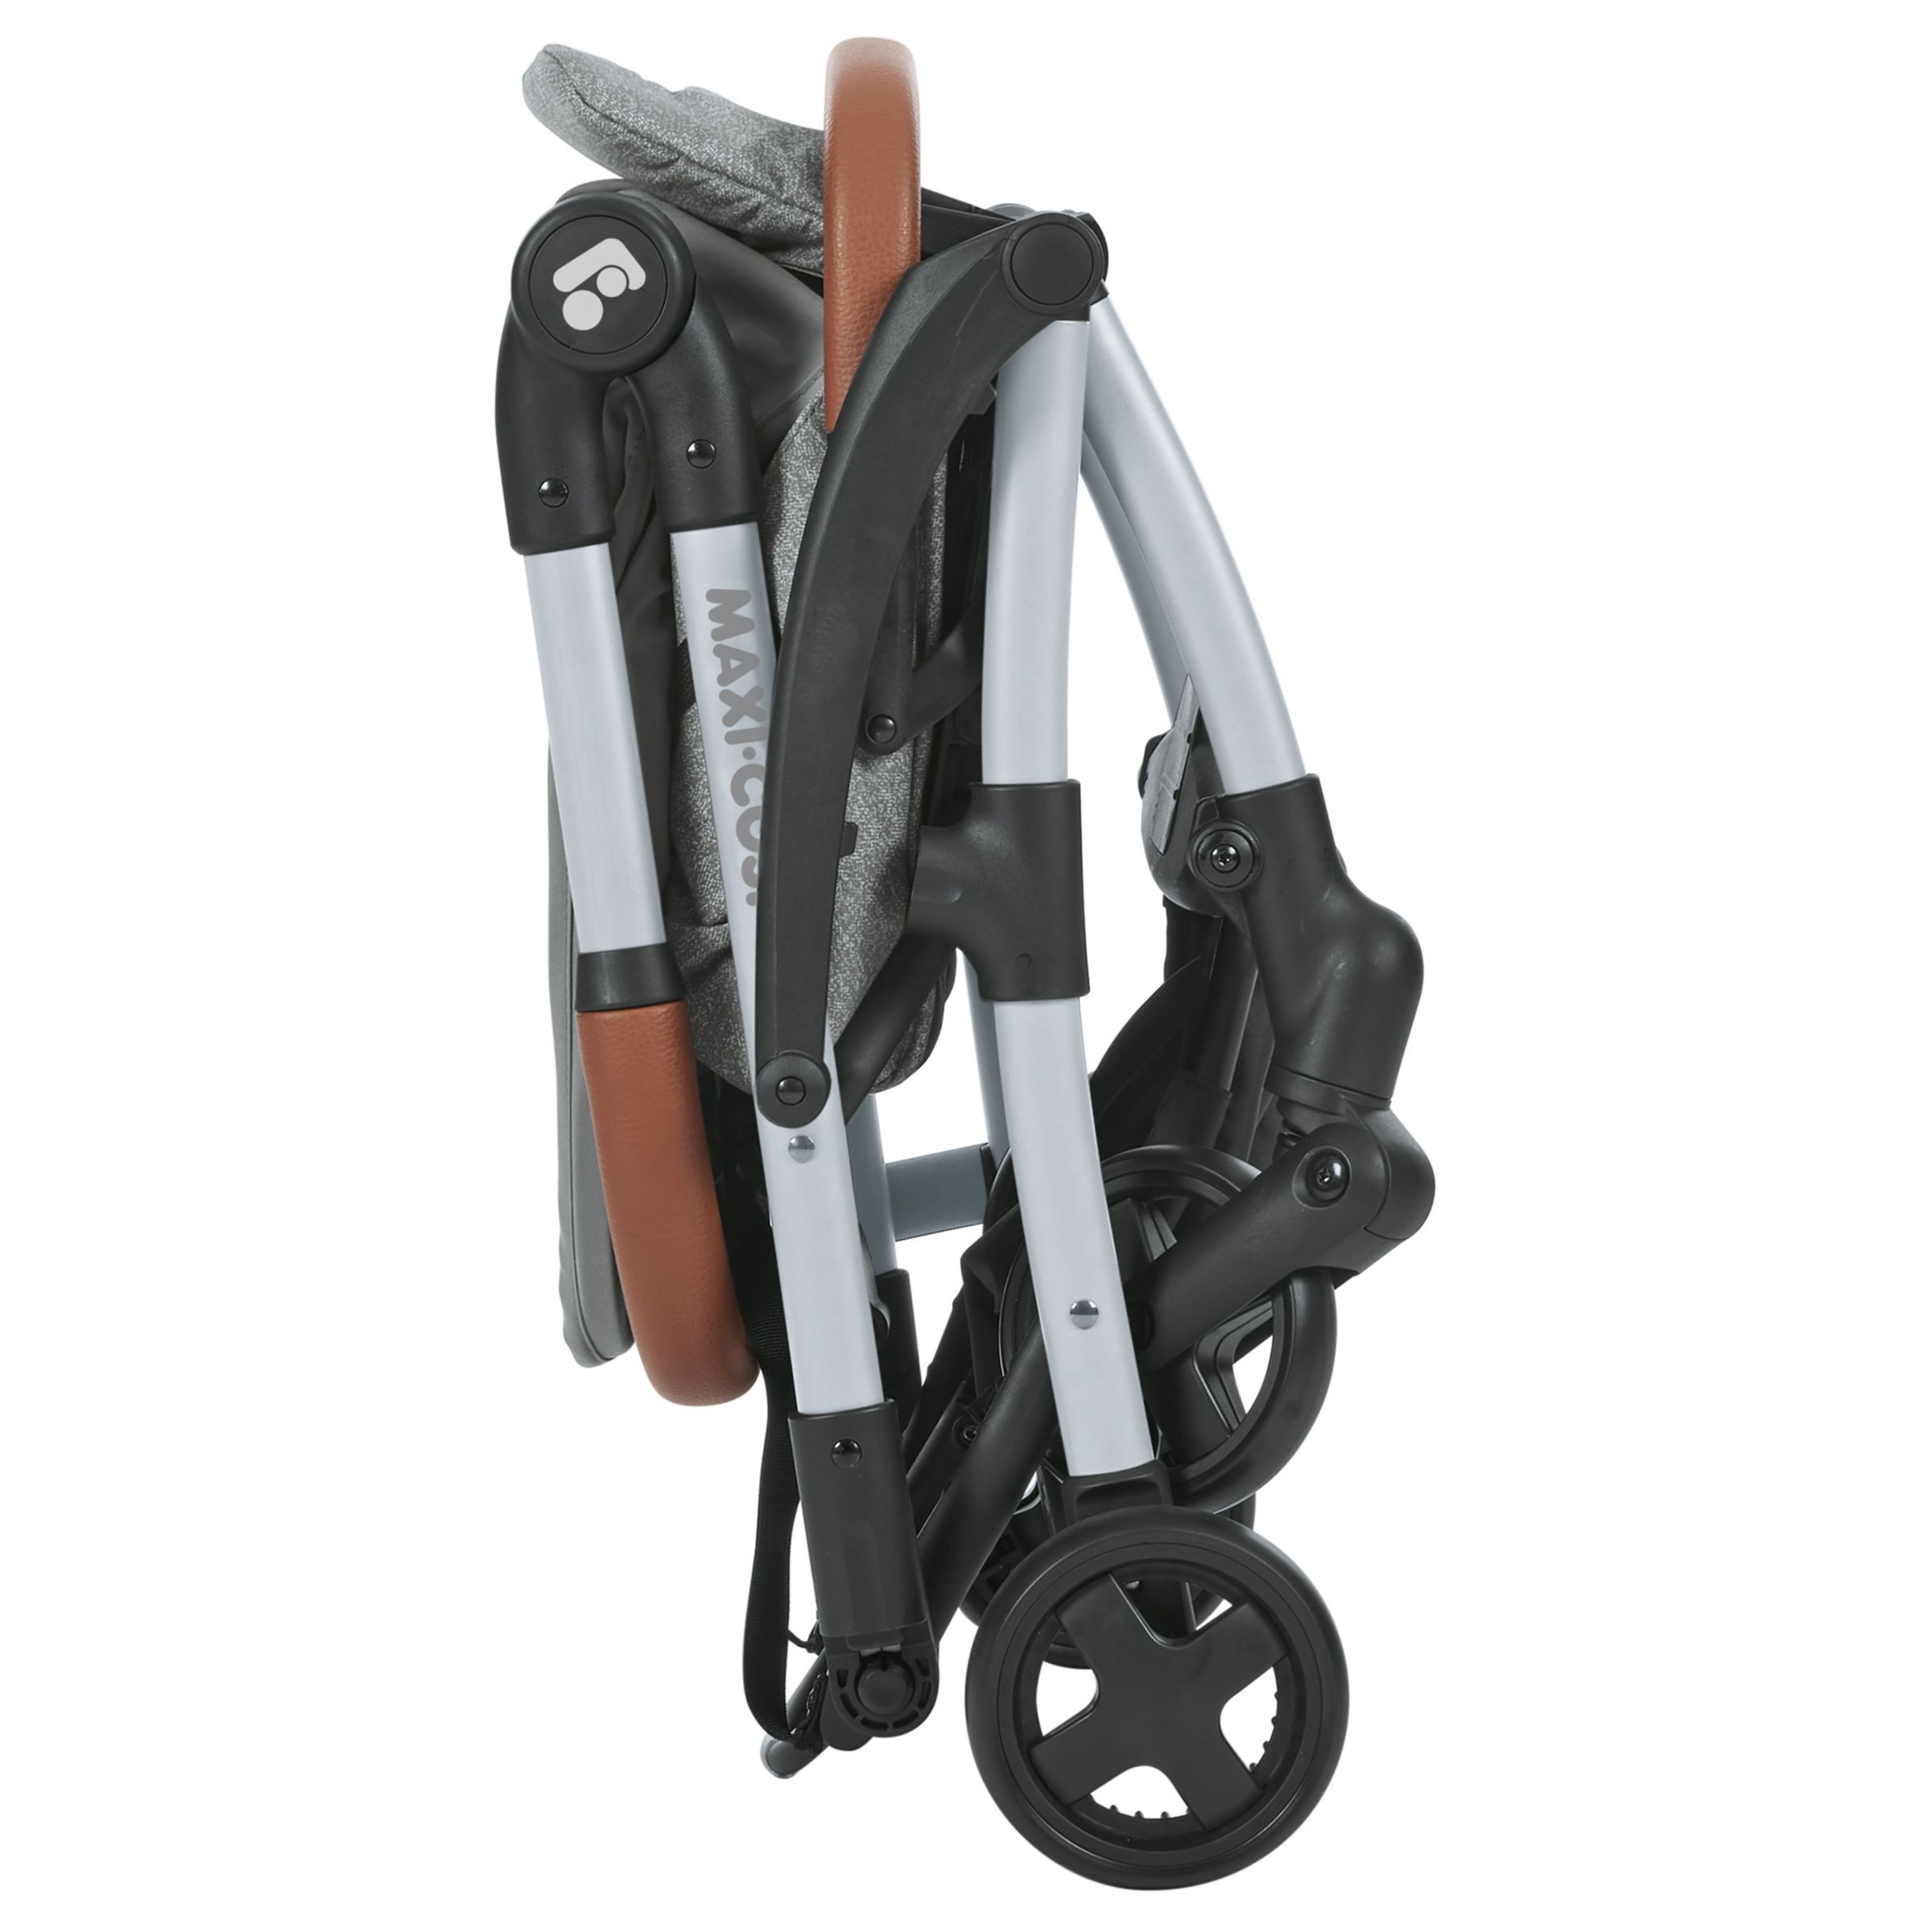 maxi cosi laika compact stroller review